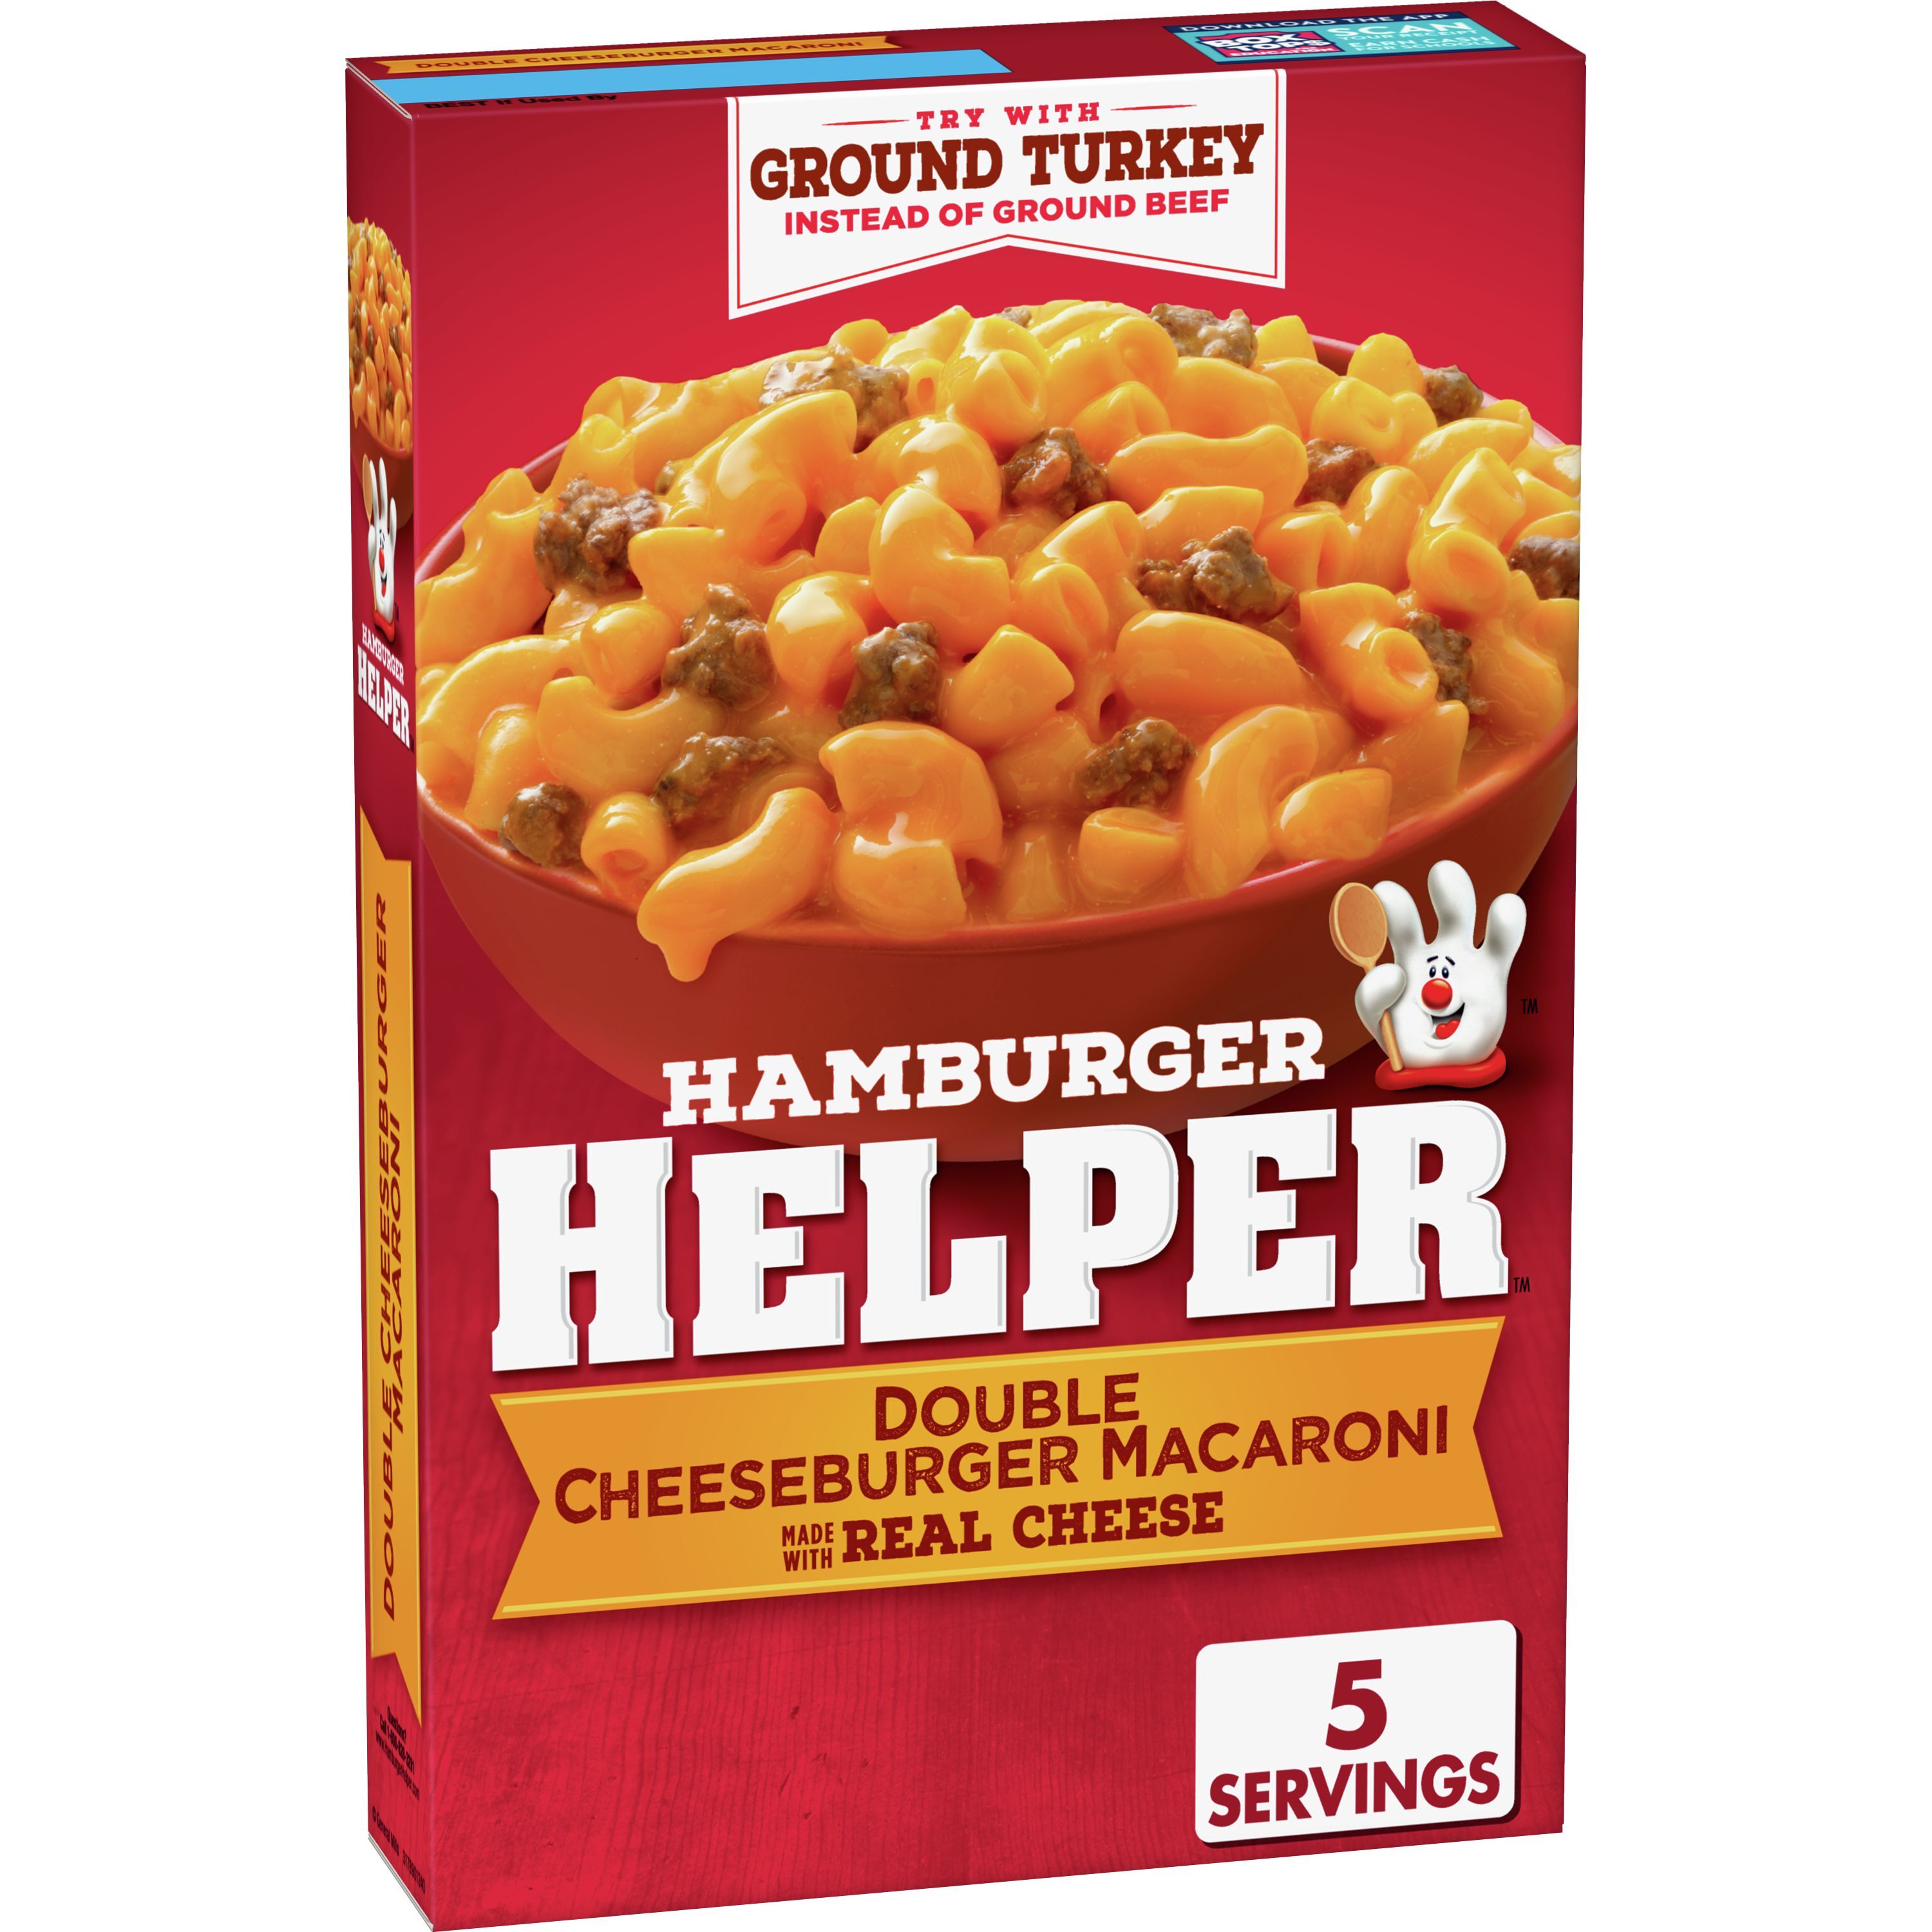 Hamburger Helper, Double Cheeseburger Macaroni Pasta Meal, 6 oz Box - image 1 of 2